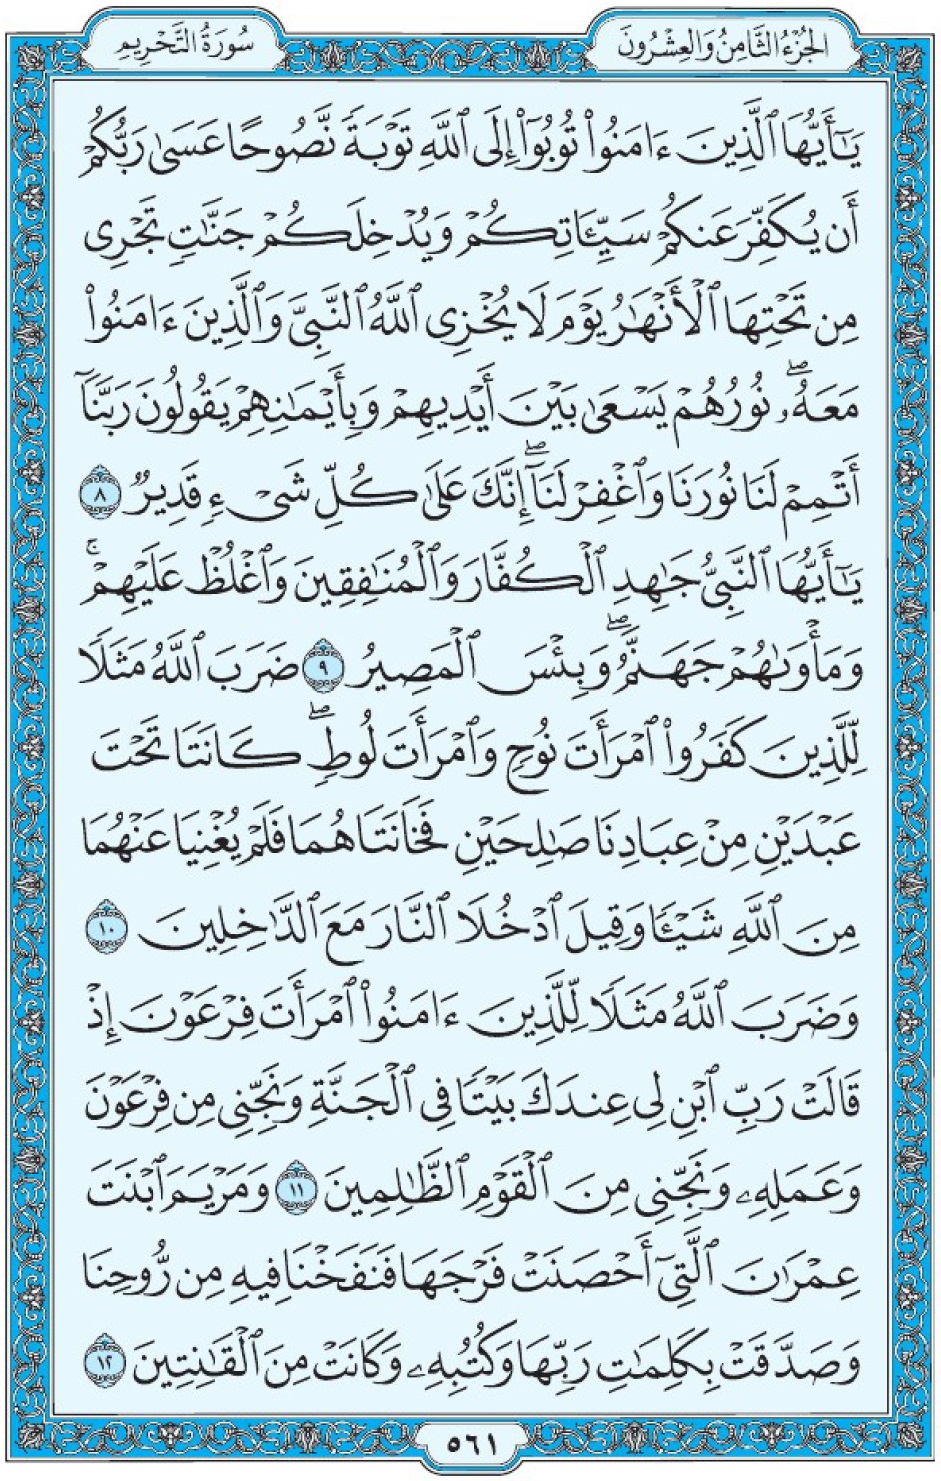 Коран Мединский мусхаф страница 561, ат-Тахрим аят 8-12